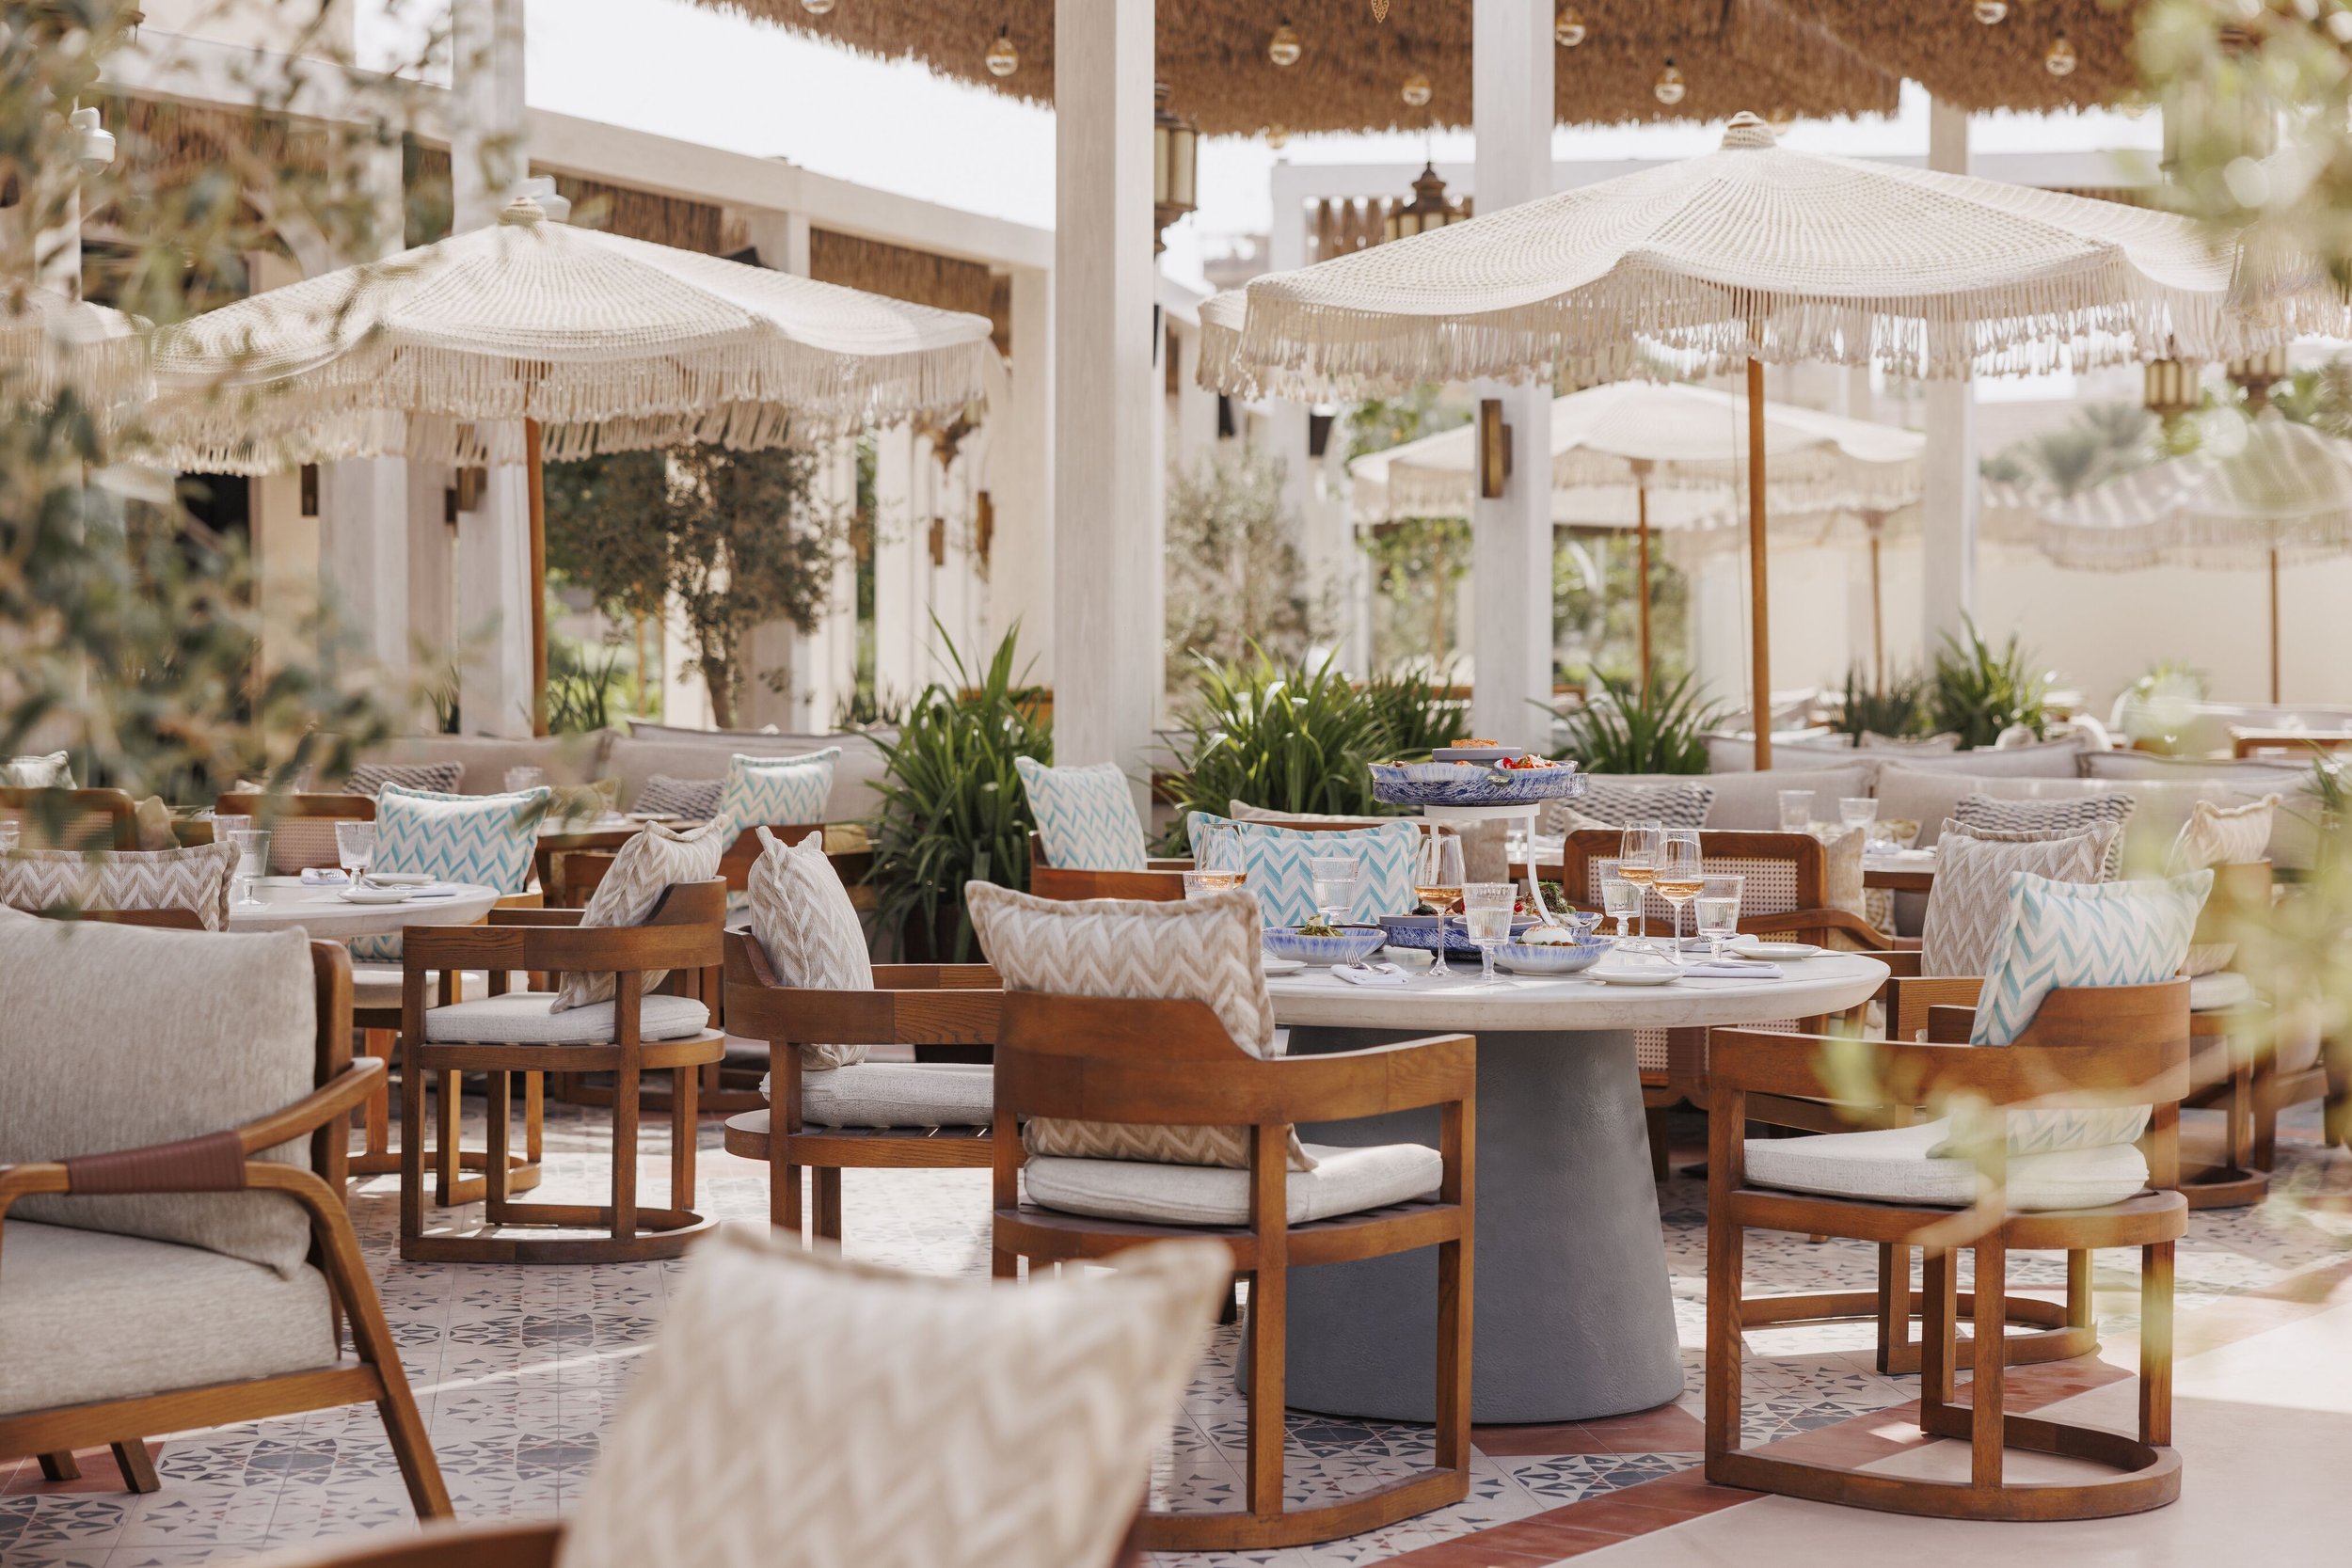 Medium_resolution_150dpi-Jumeirah Beach Hotel - F&B - Nuska - Table Setup.jpg